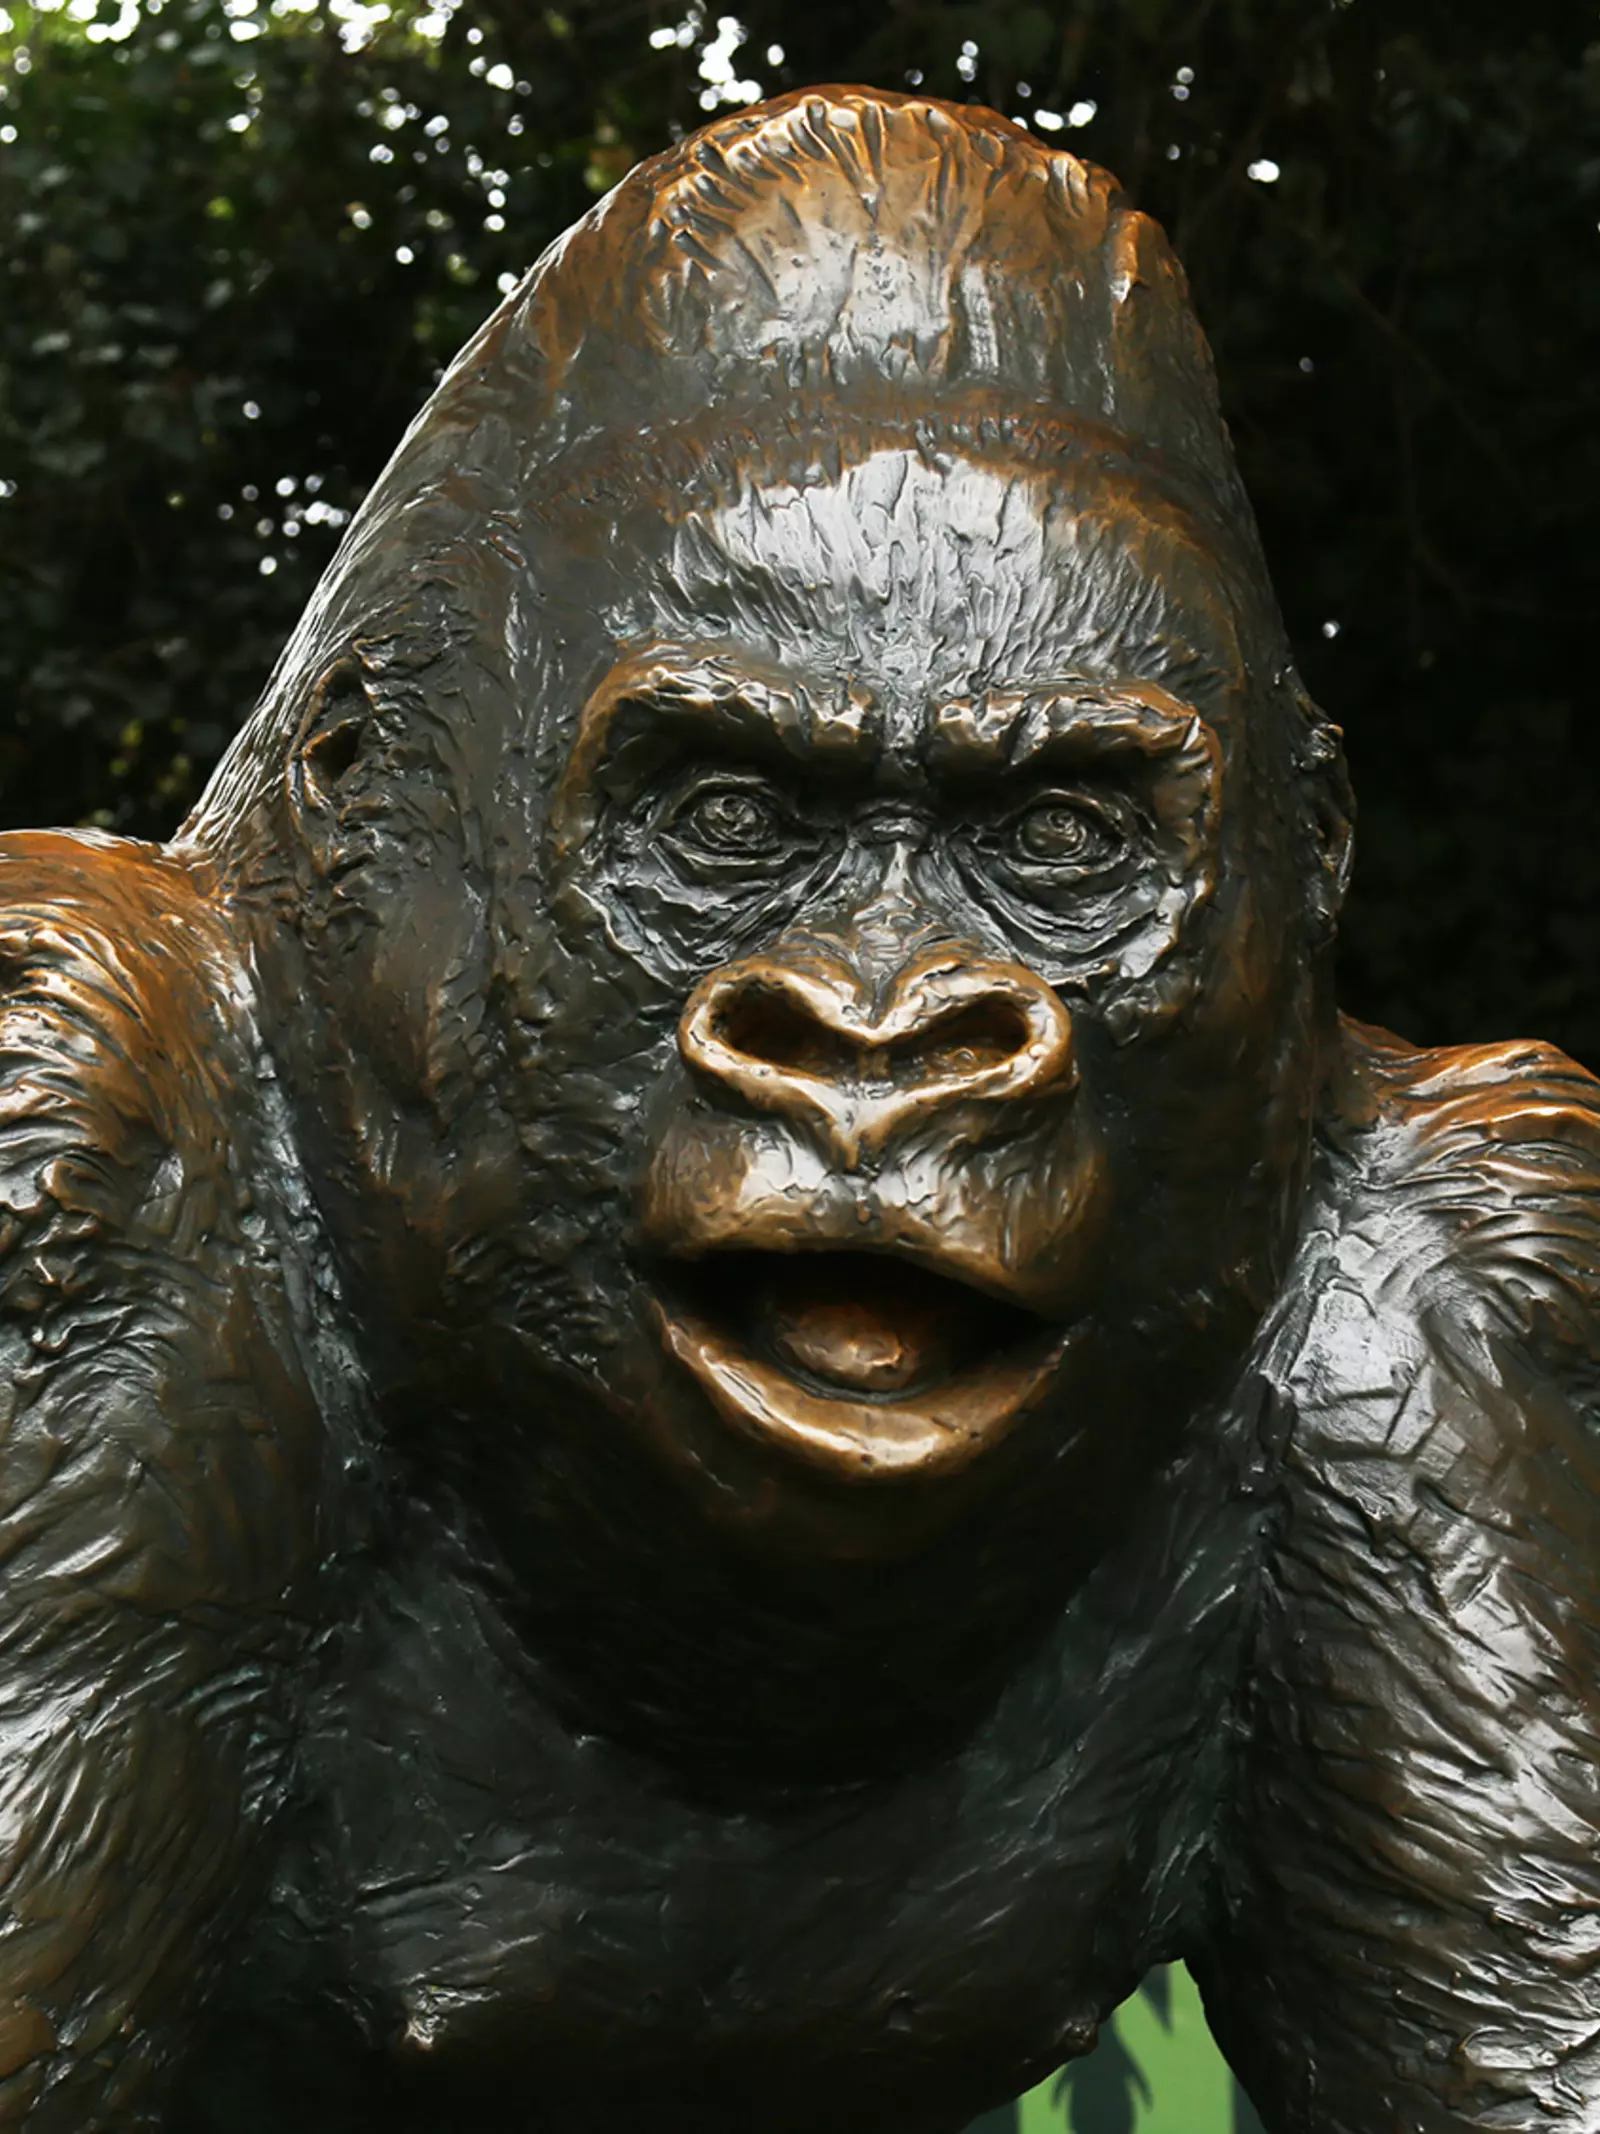 Bronze Guy the Gorilla statue at London Zoo